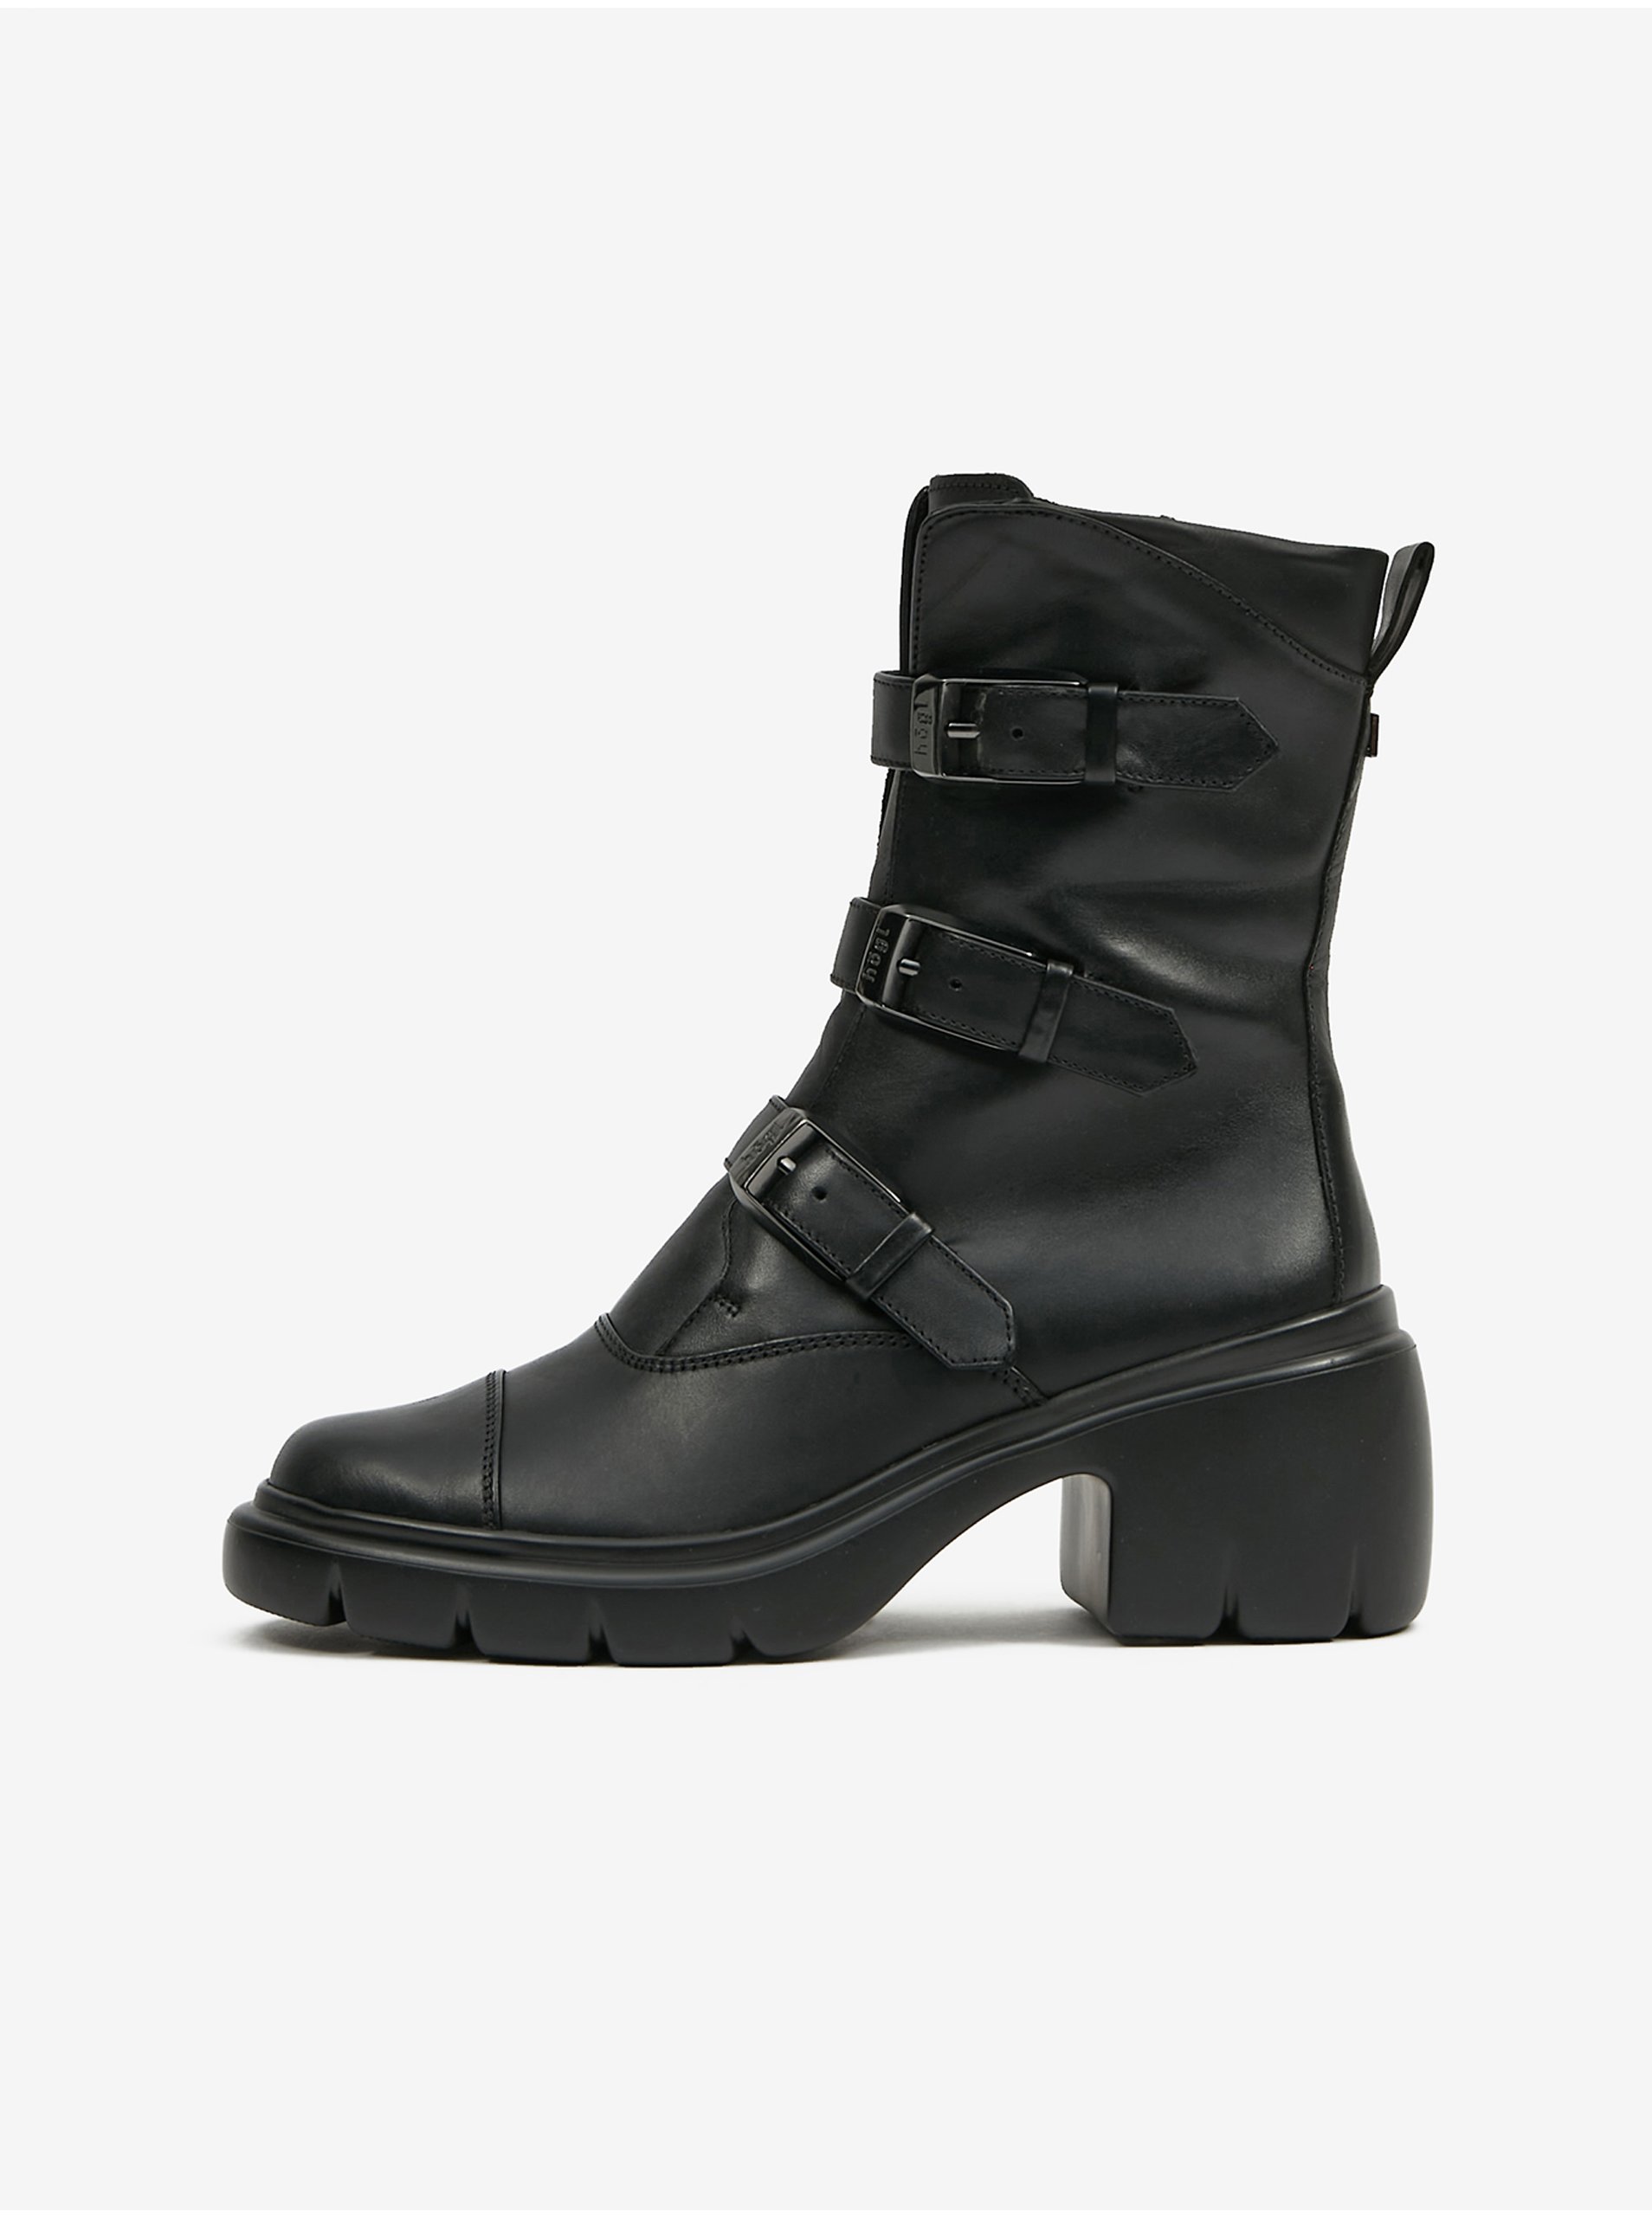 E-shop Čierne dámske kožené členkové topánky Högl Biker